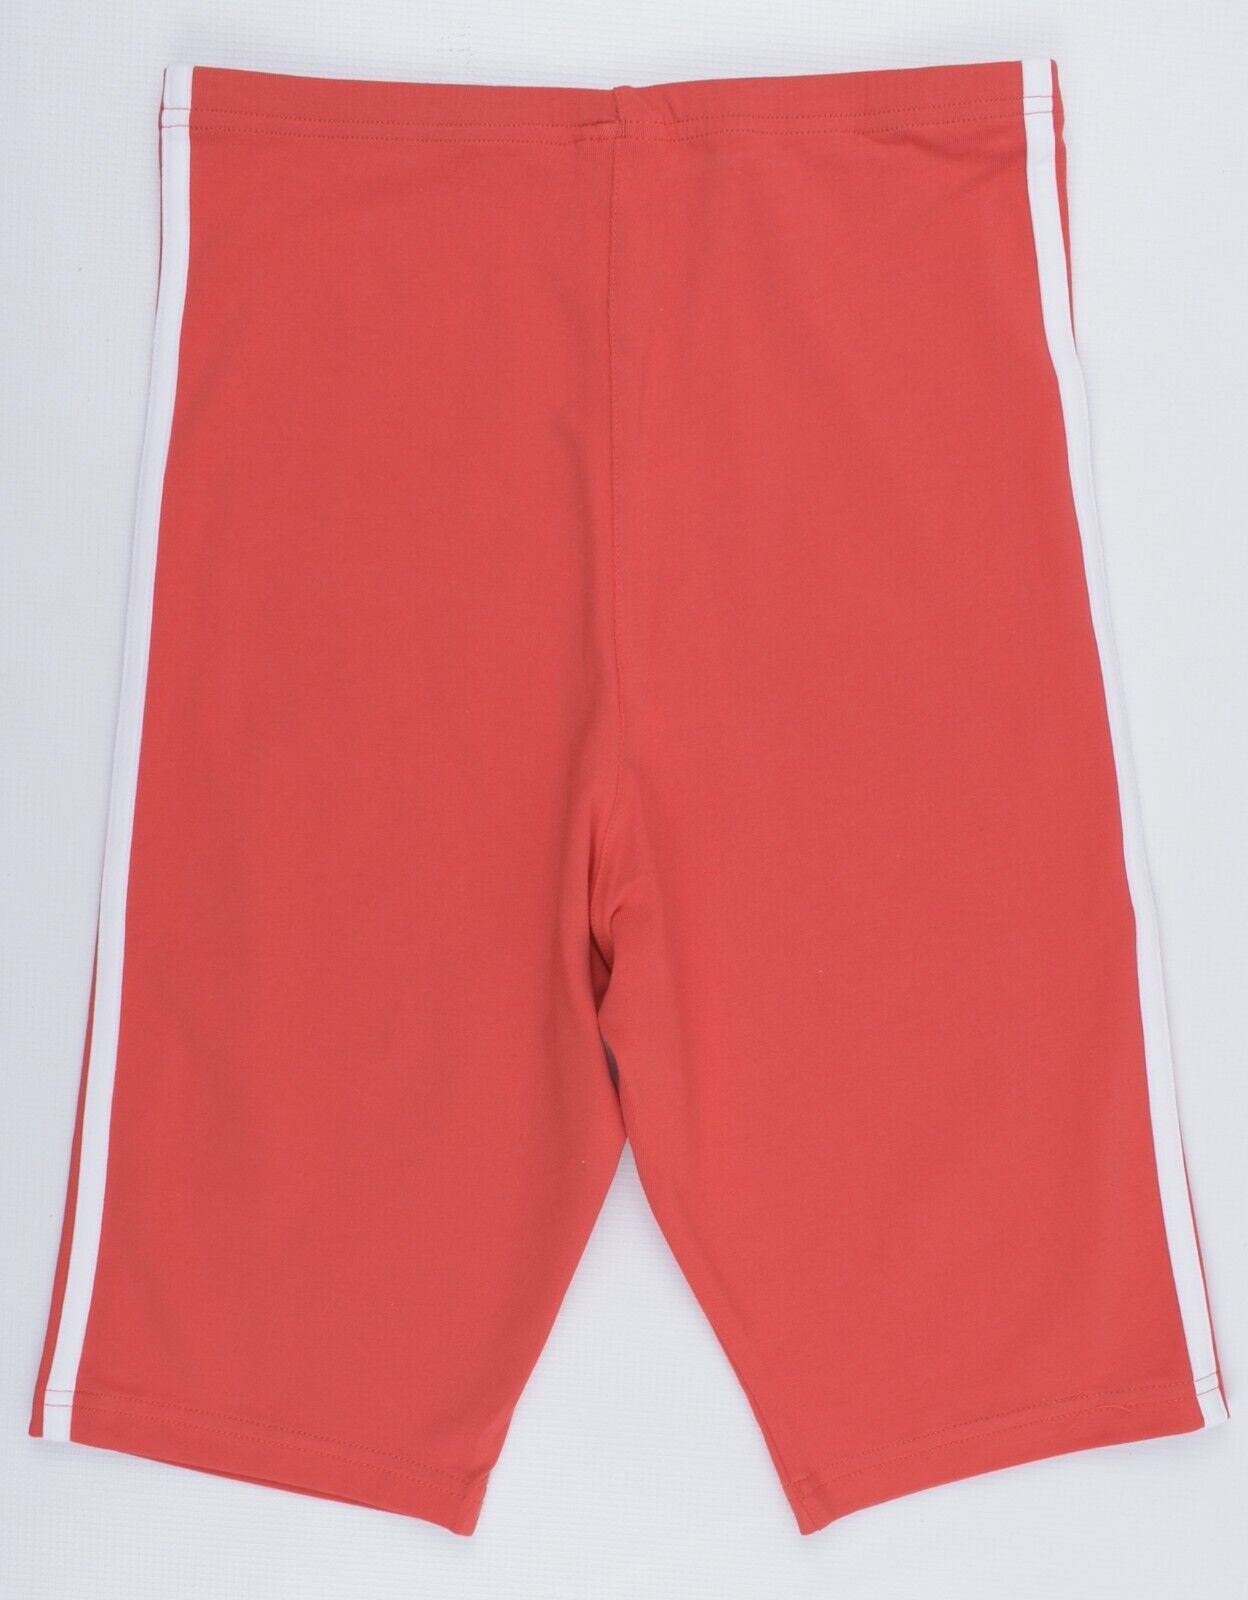 ADIDAS Women's 3 Stripes Essential Short Leggings Shorts, Red, size S (UK 8-10)